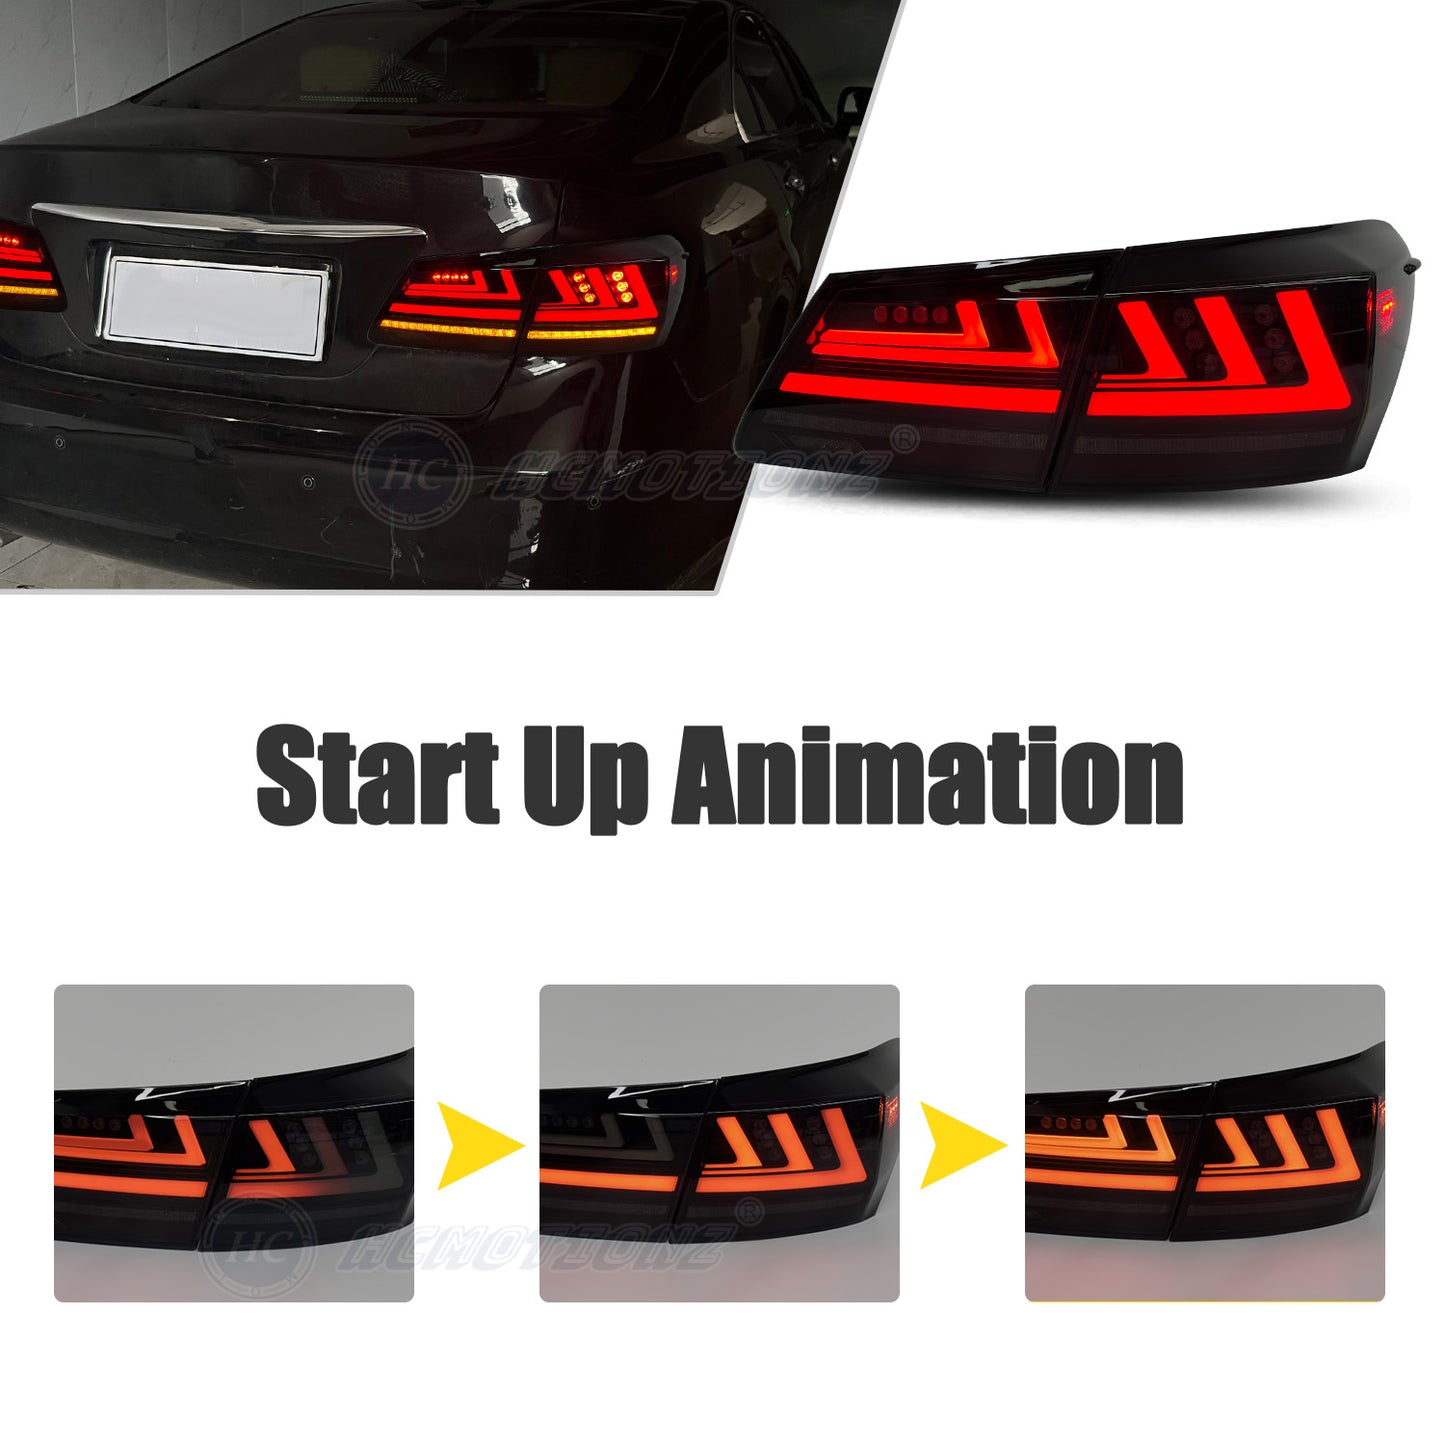 HCMOTION LED Tail Lights For 5th Gen Lexus ES 350 ES 240 2006-2012 Start UP Animation